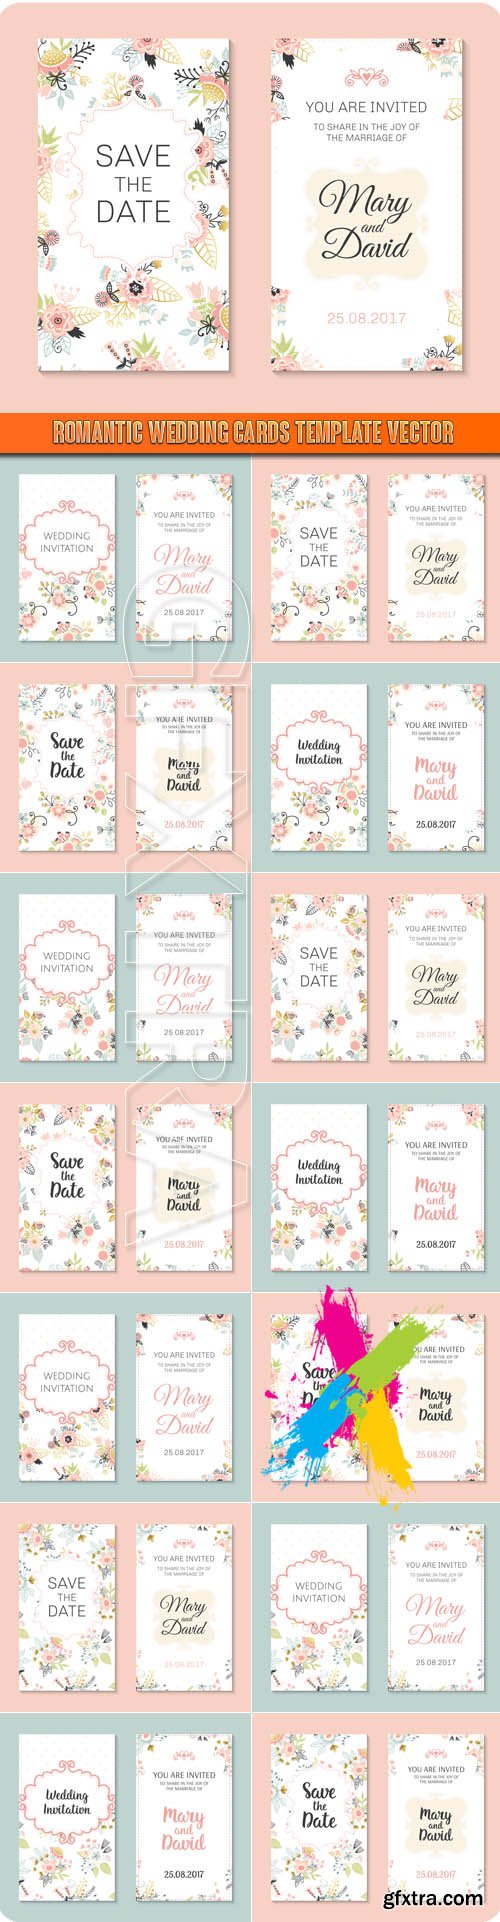 Romantic wedding cards template vector